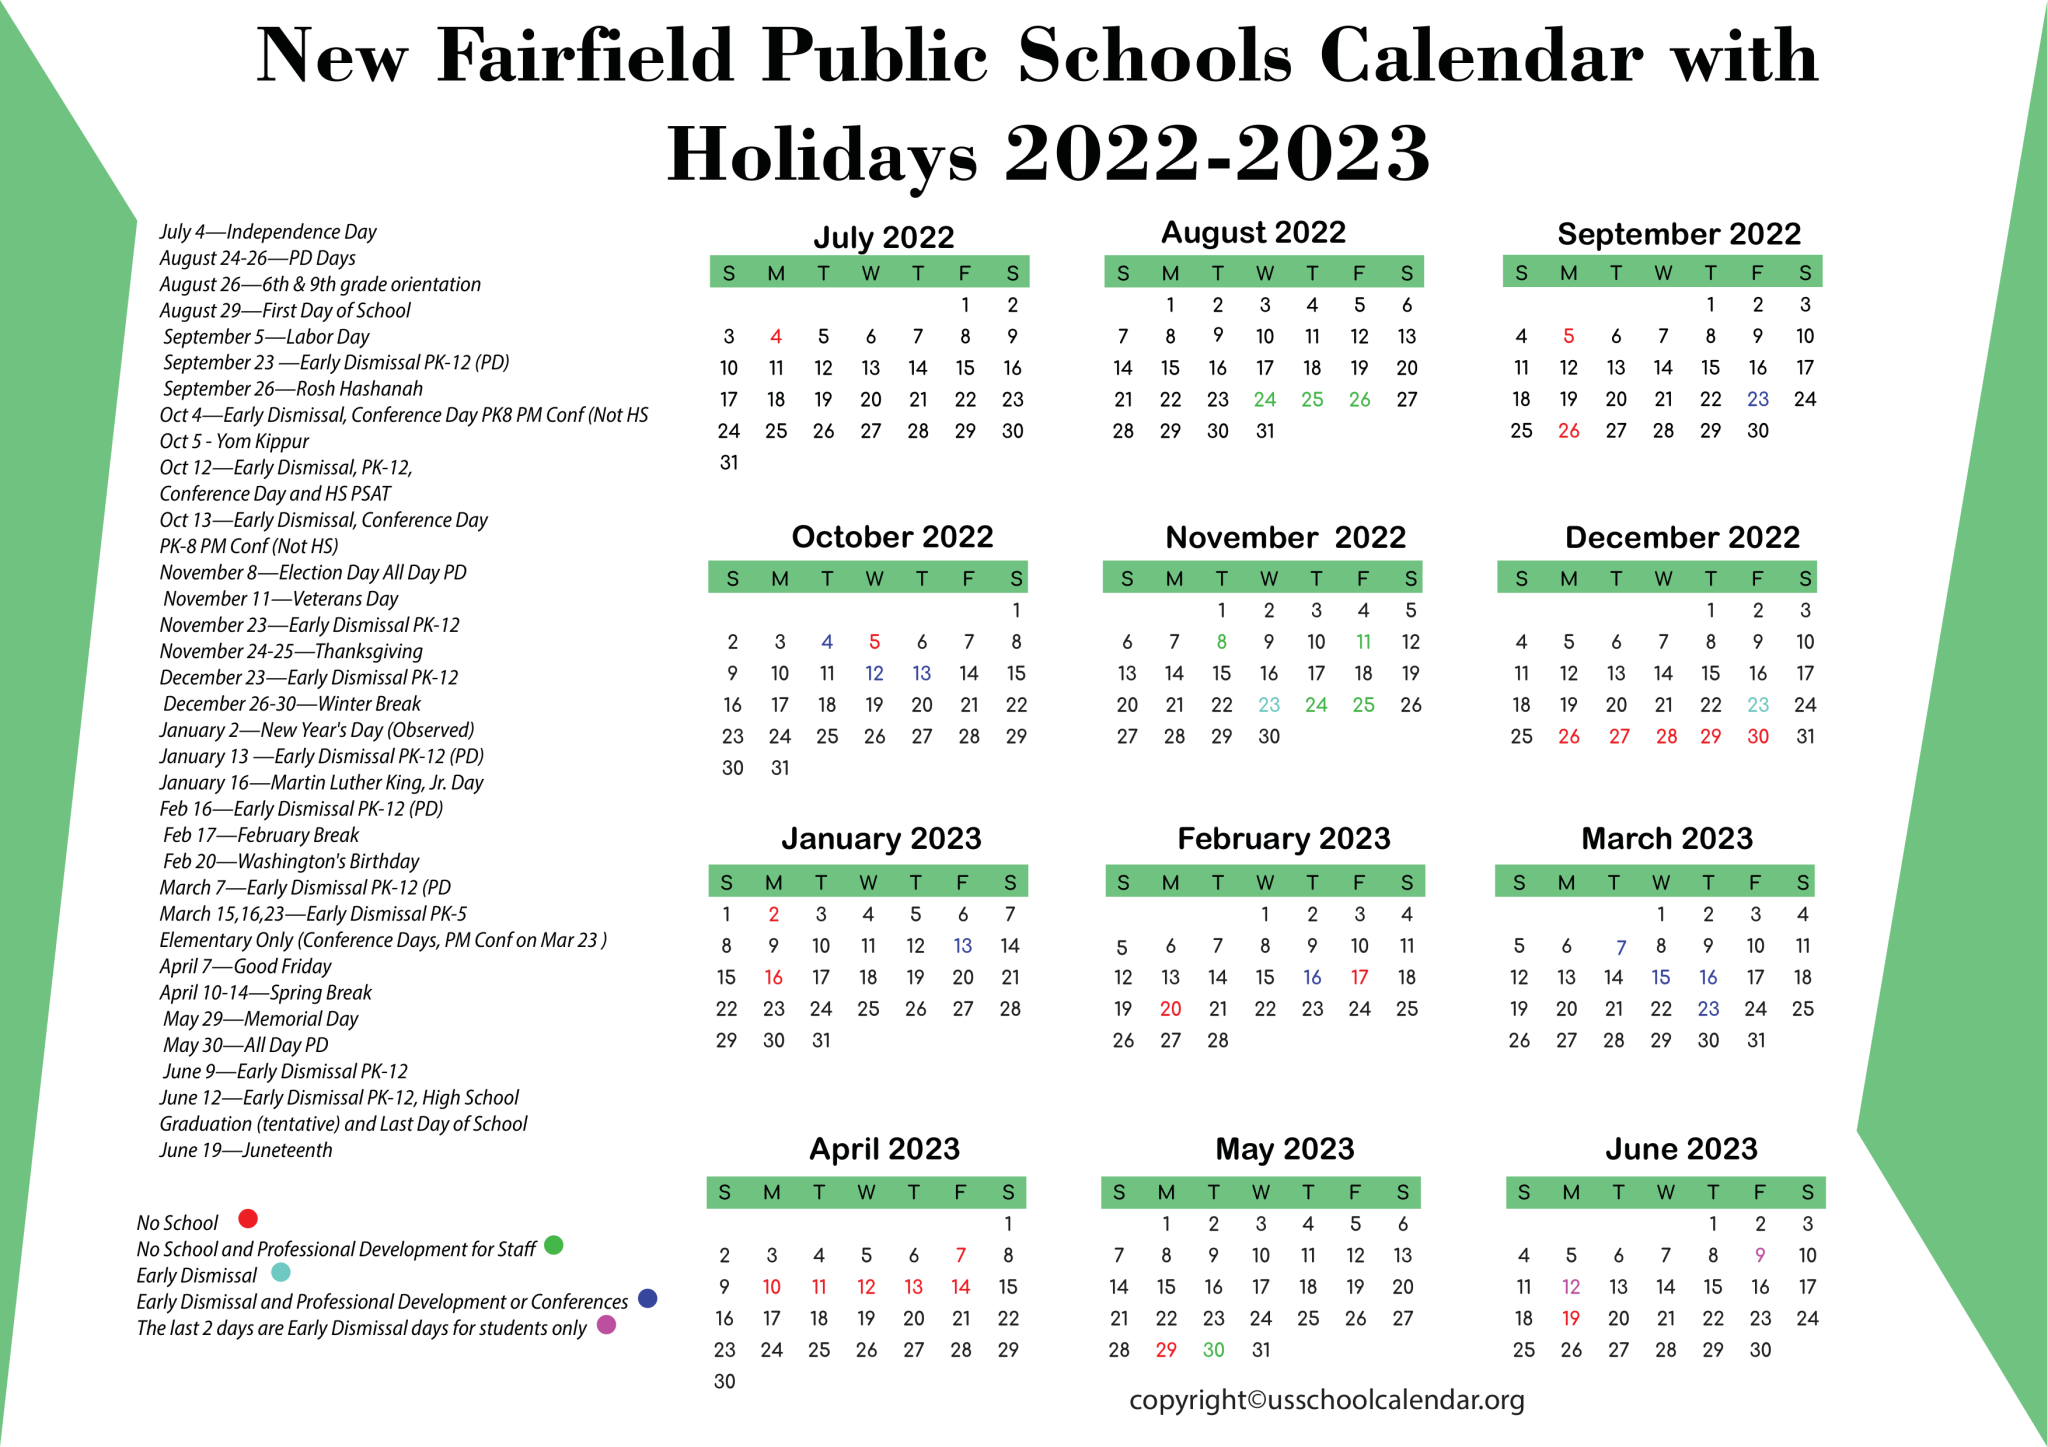 New Fairfield Public Schools Calendar with Holidays 2023